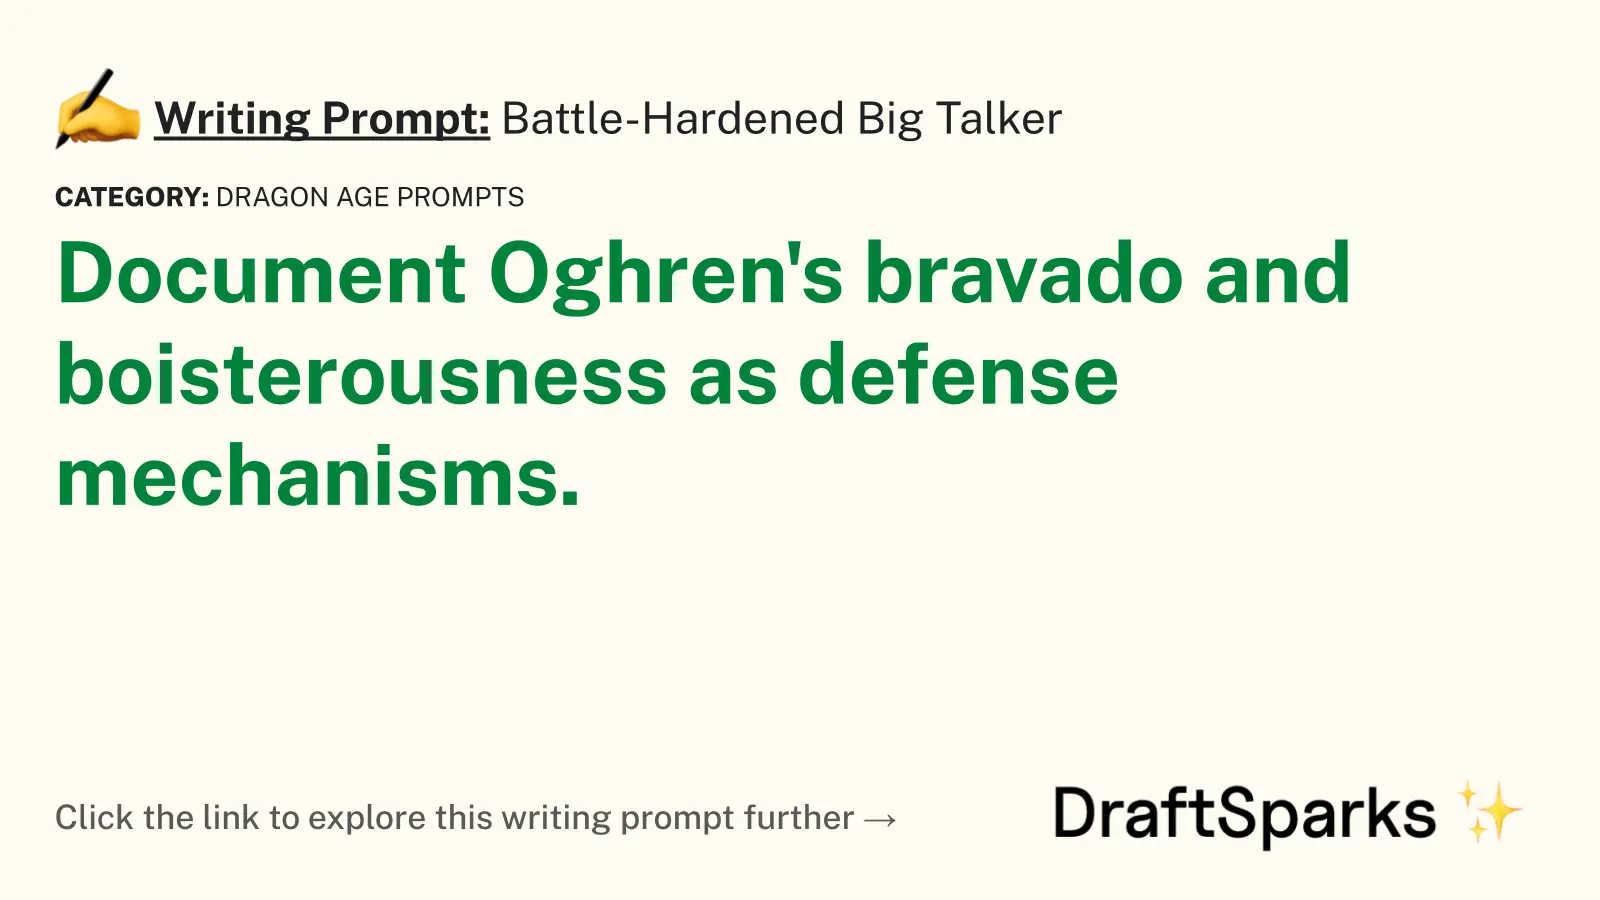 Battle-Hardened Big Talker